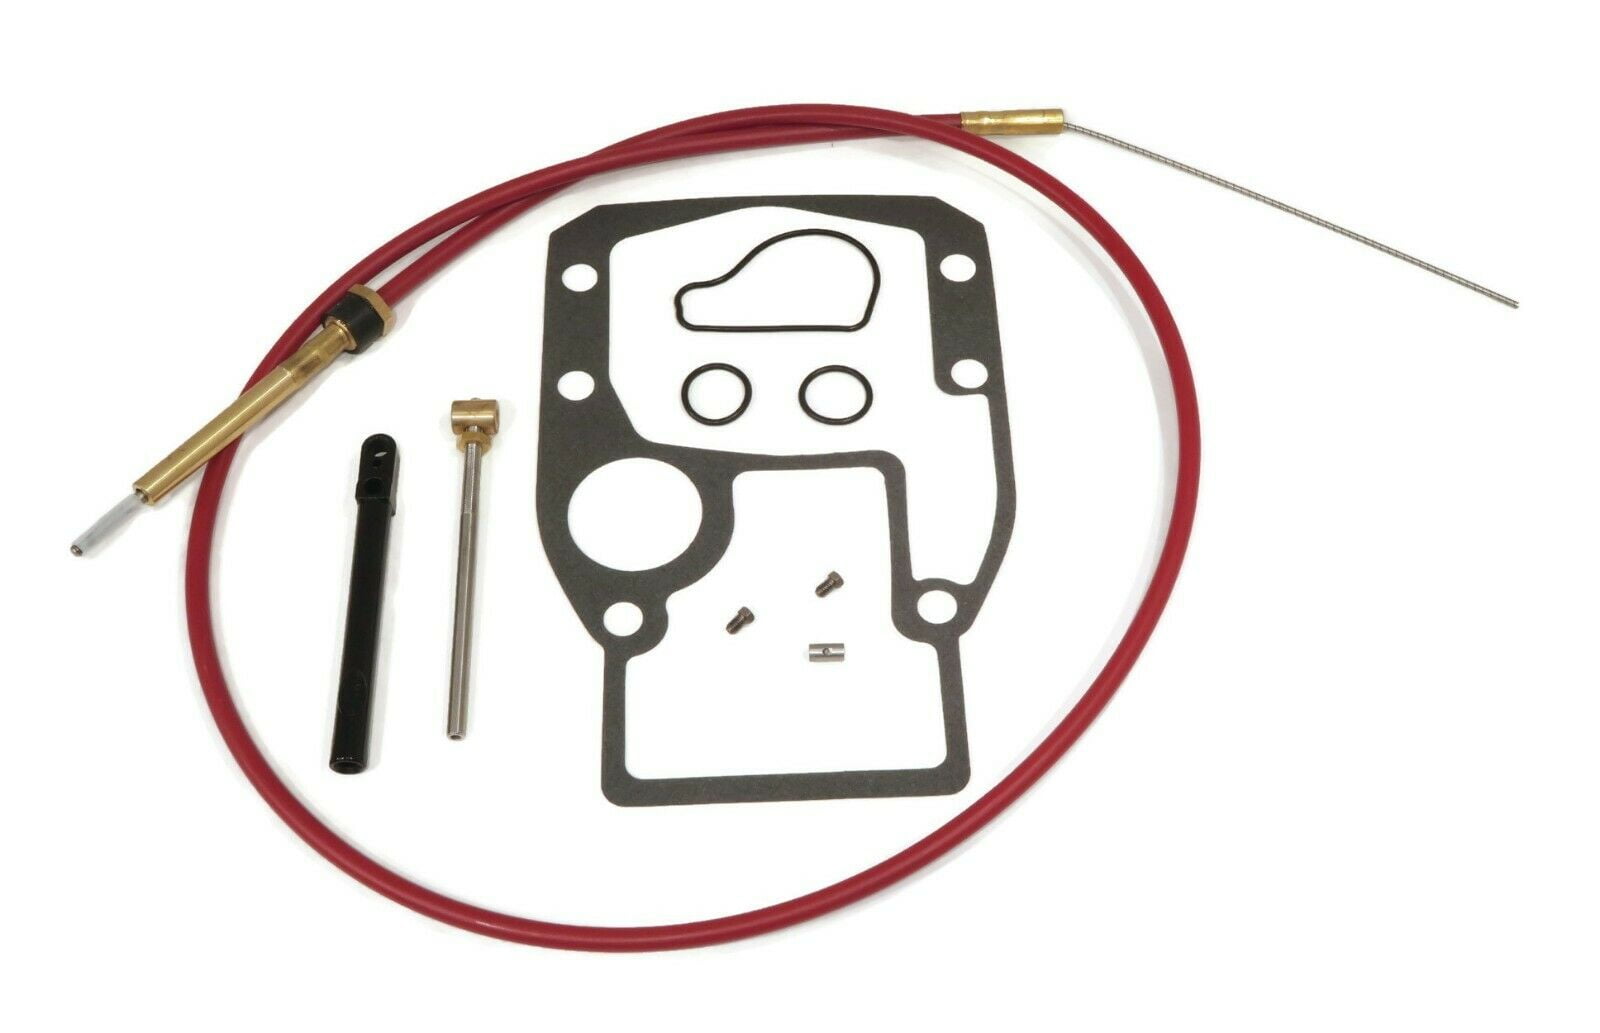 Shift Cable Kit & Adjustment Tools Gasket Set Fit for 86-93 OMC Sterndrive Cobra 